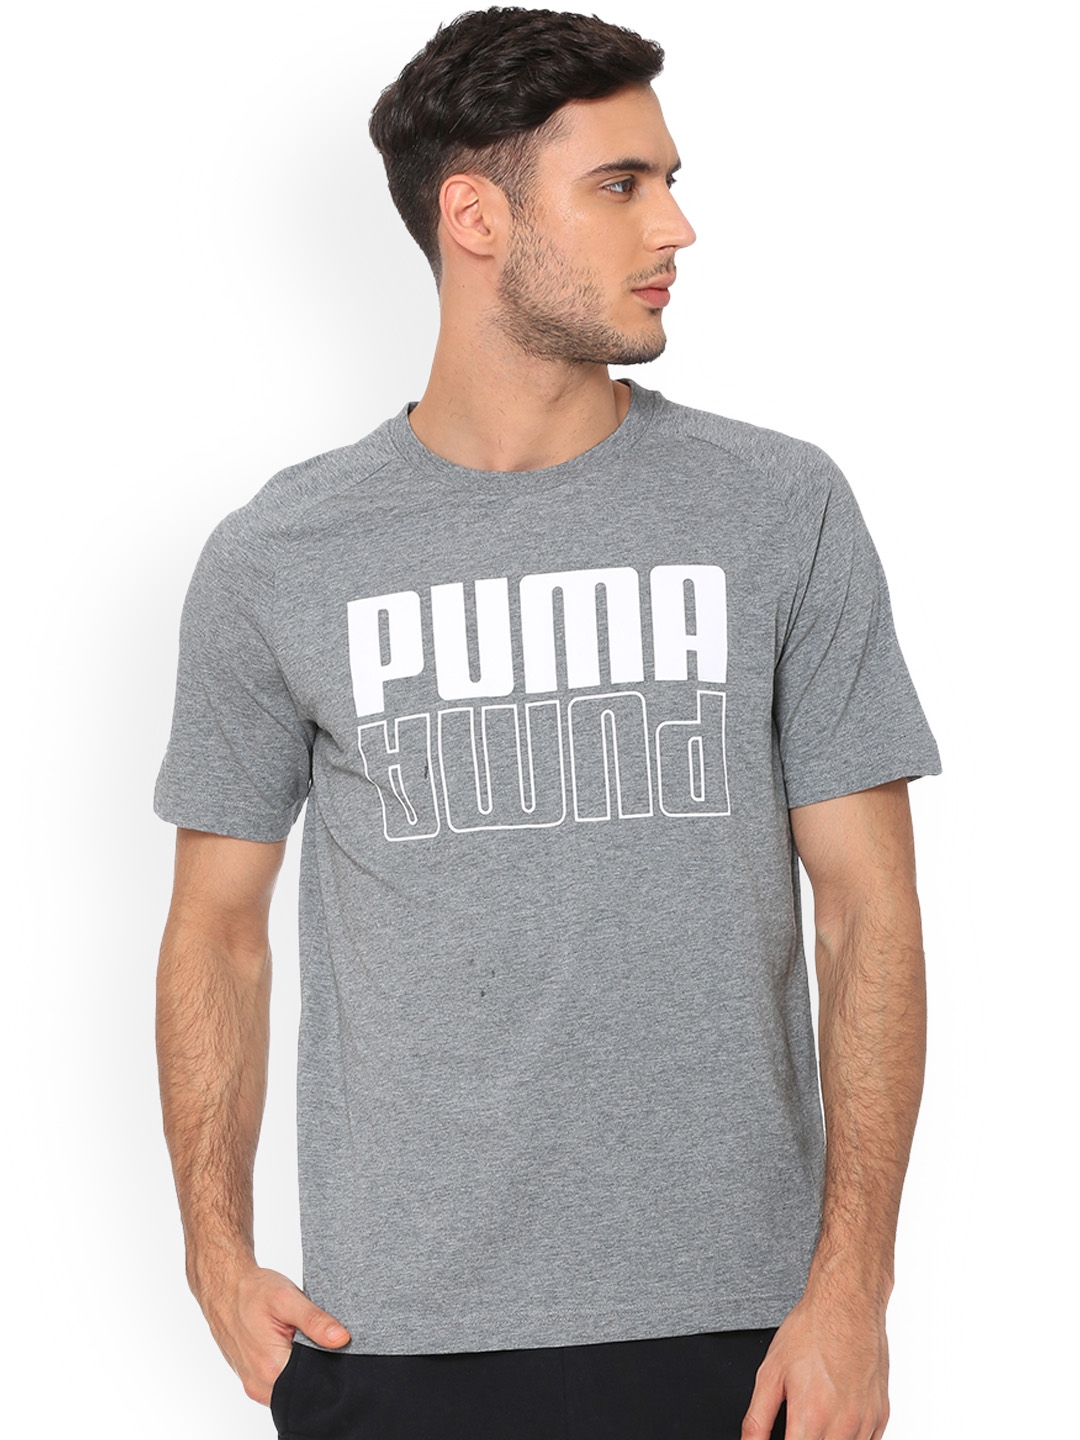 Buy Puma Men Grey Printed Round Neck T 